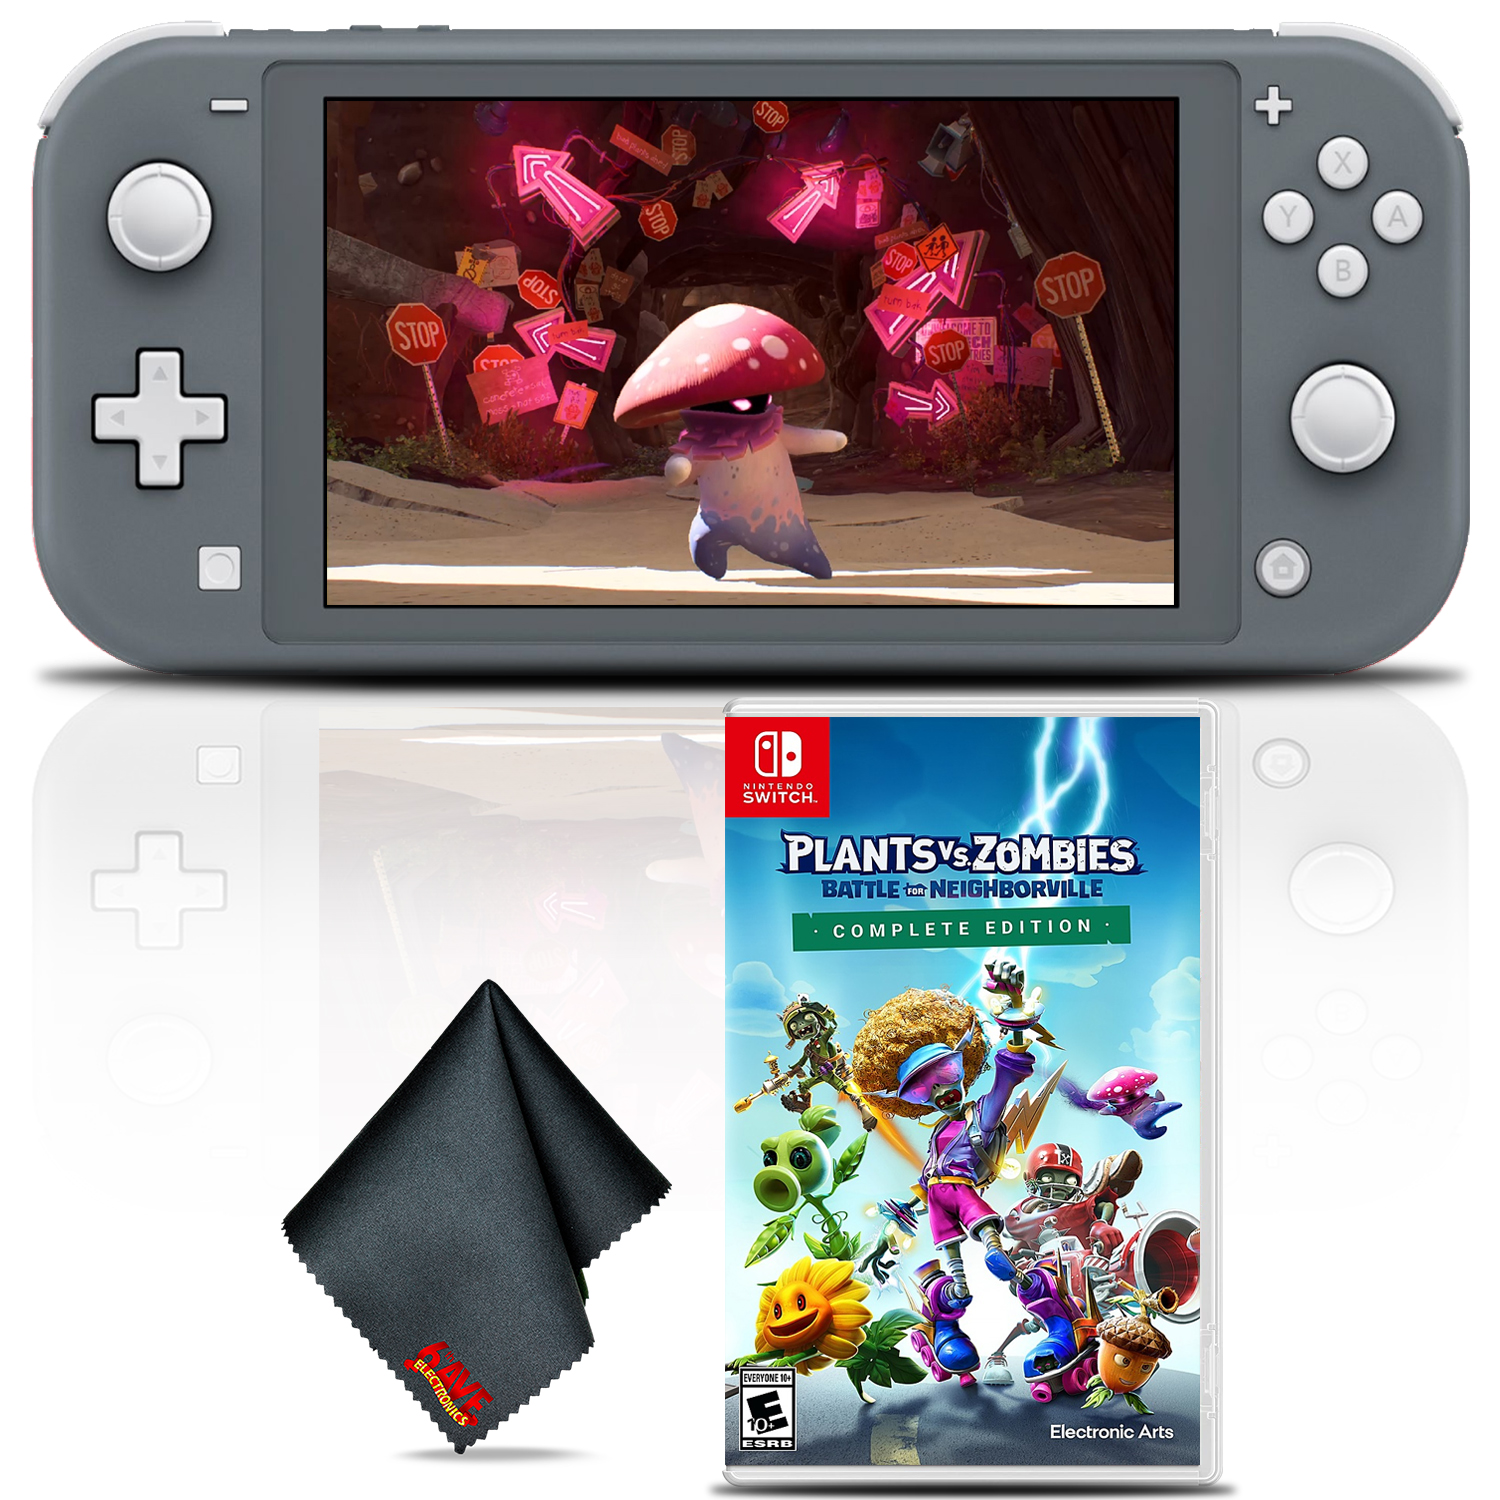 Zombie nintendo switch. Pikmin 3 Deluxe Nintendo Switch. Нинтендо свитч растения против зомби. Nintendo Switch Lite Coral.